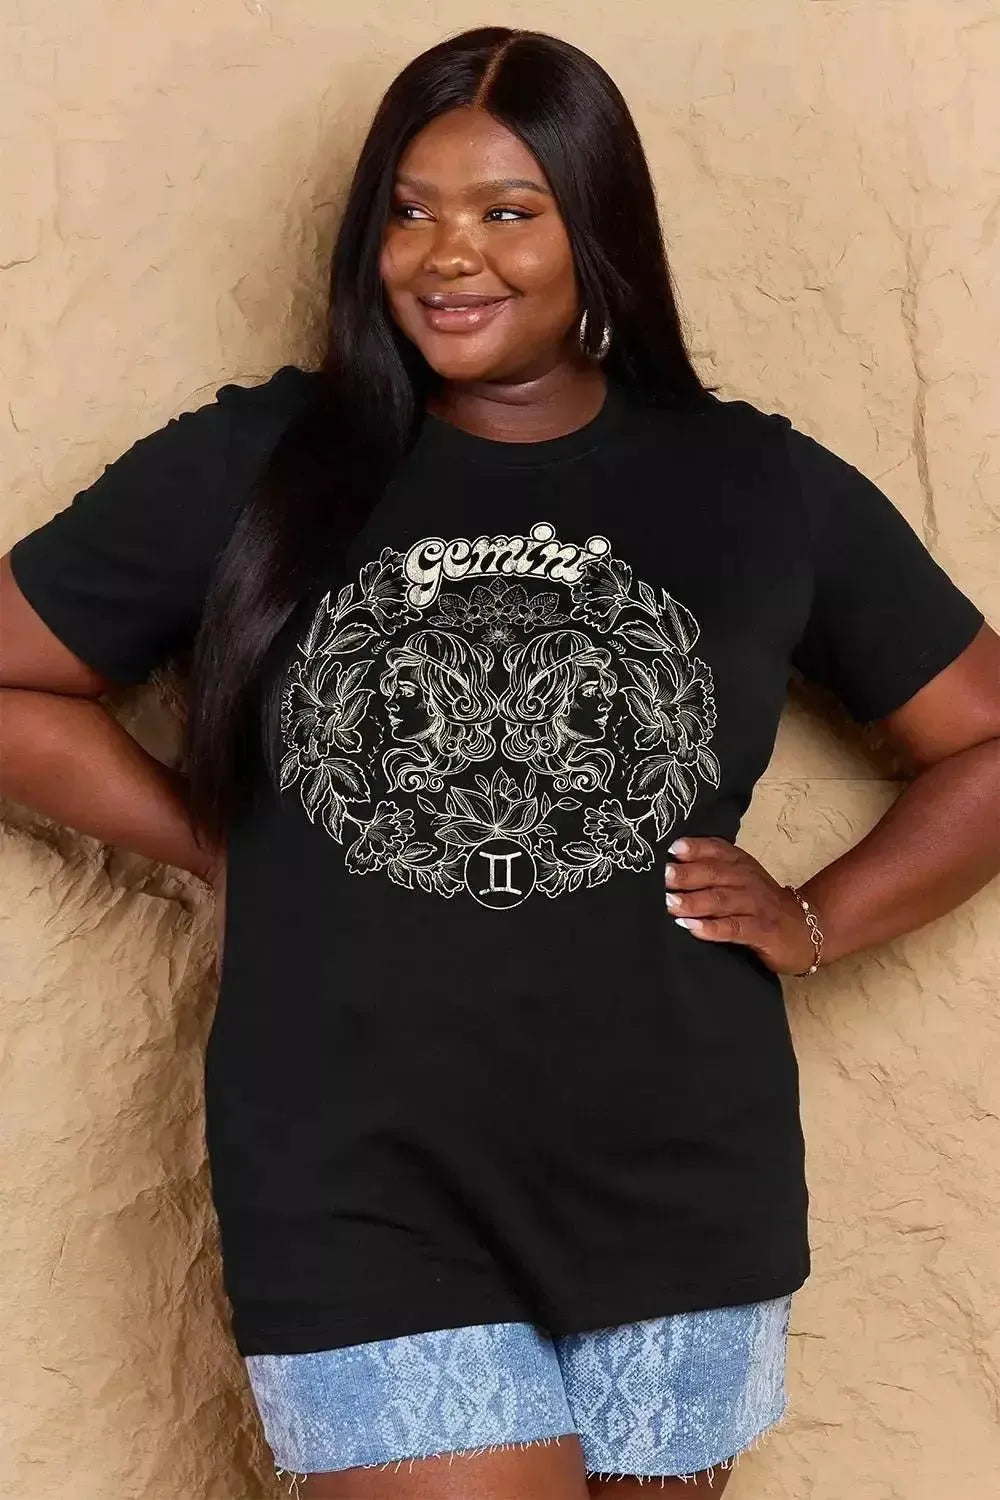 Simply Love Full Size GEMINI Graphic T-Shirt - Godiva Oya Bey